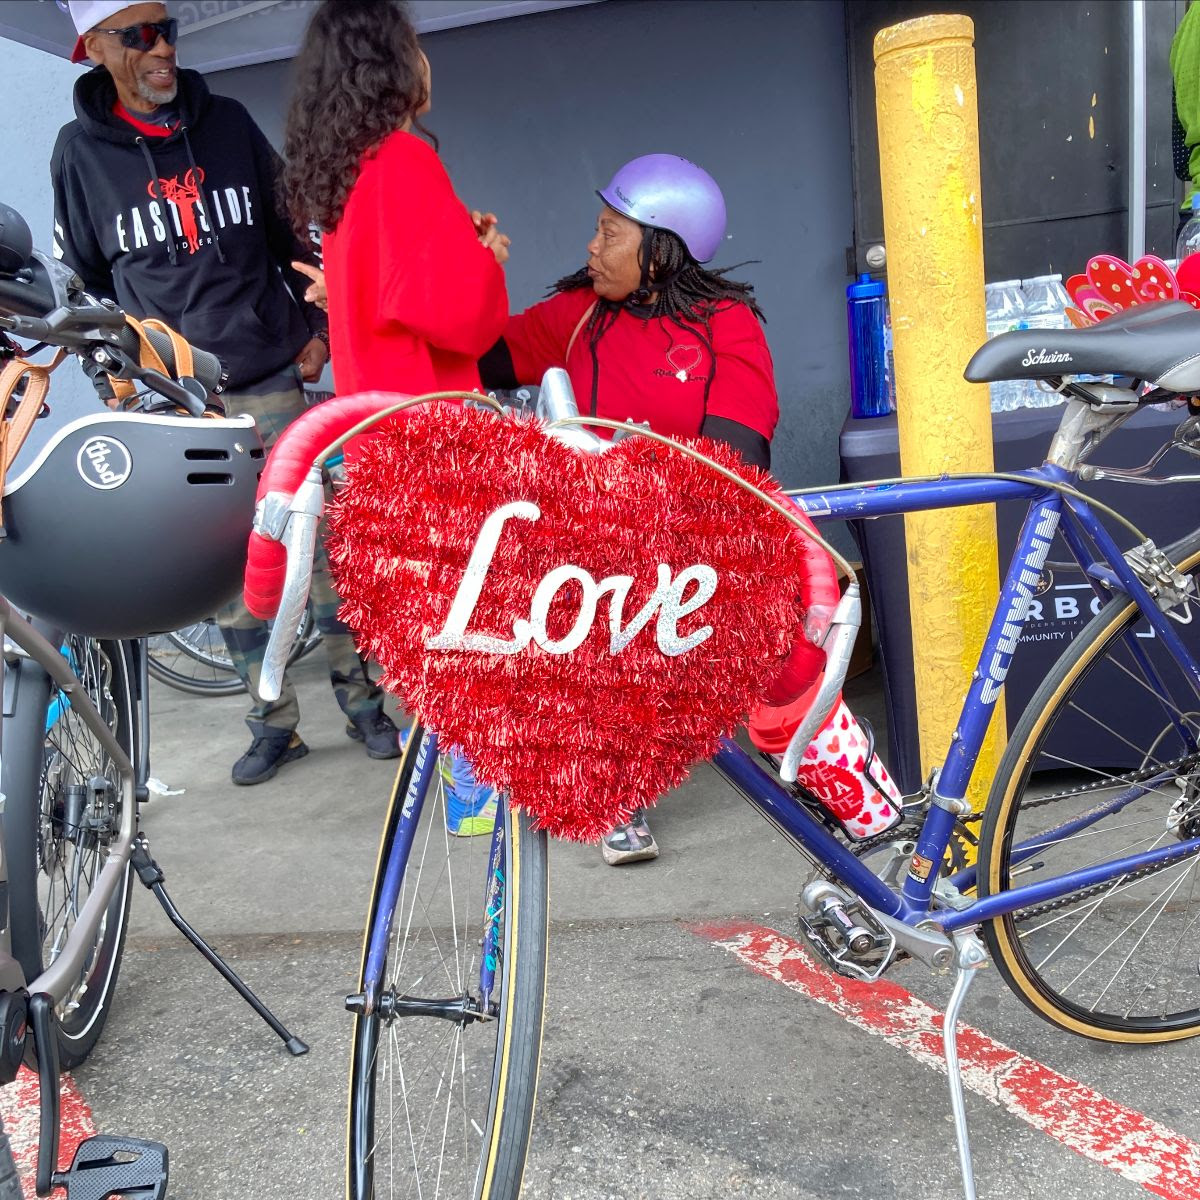 Annual Eastside Riders Ride 4 Love Bike Ride Held In Watts